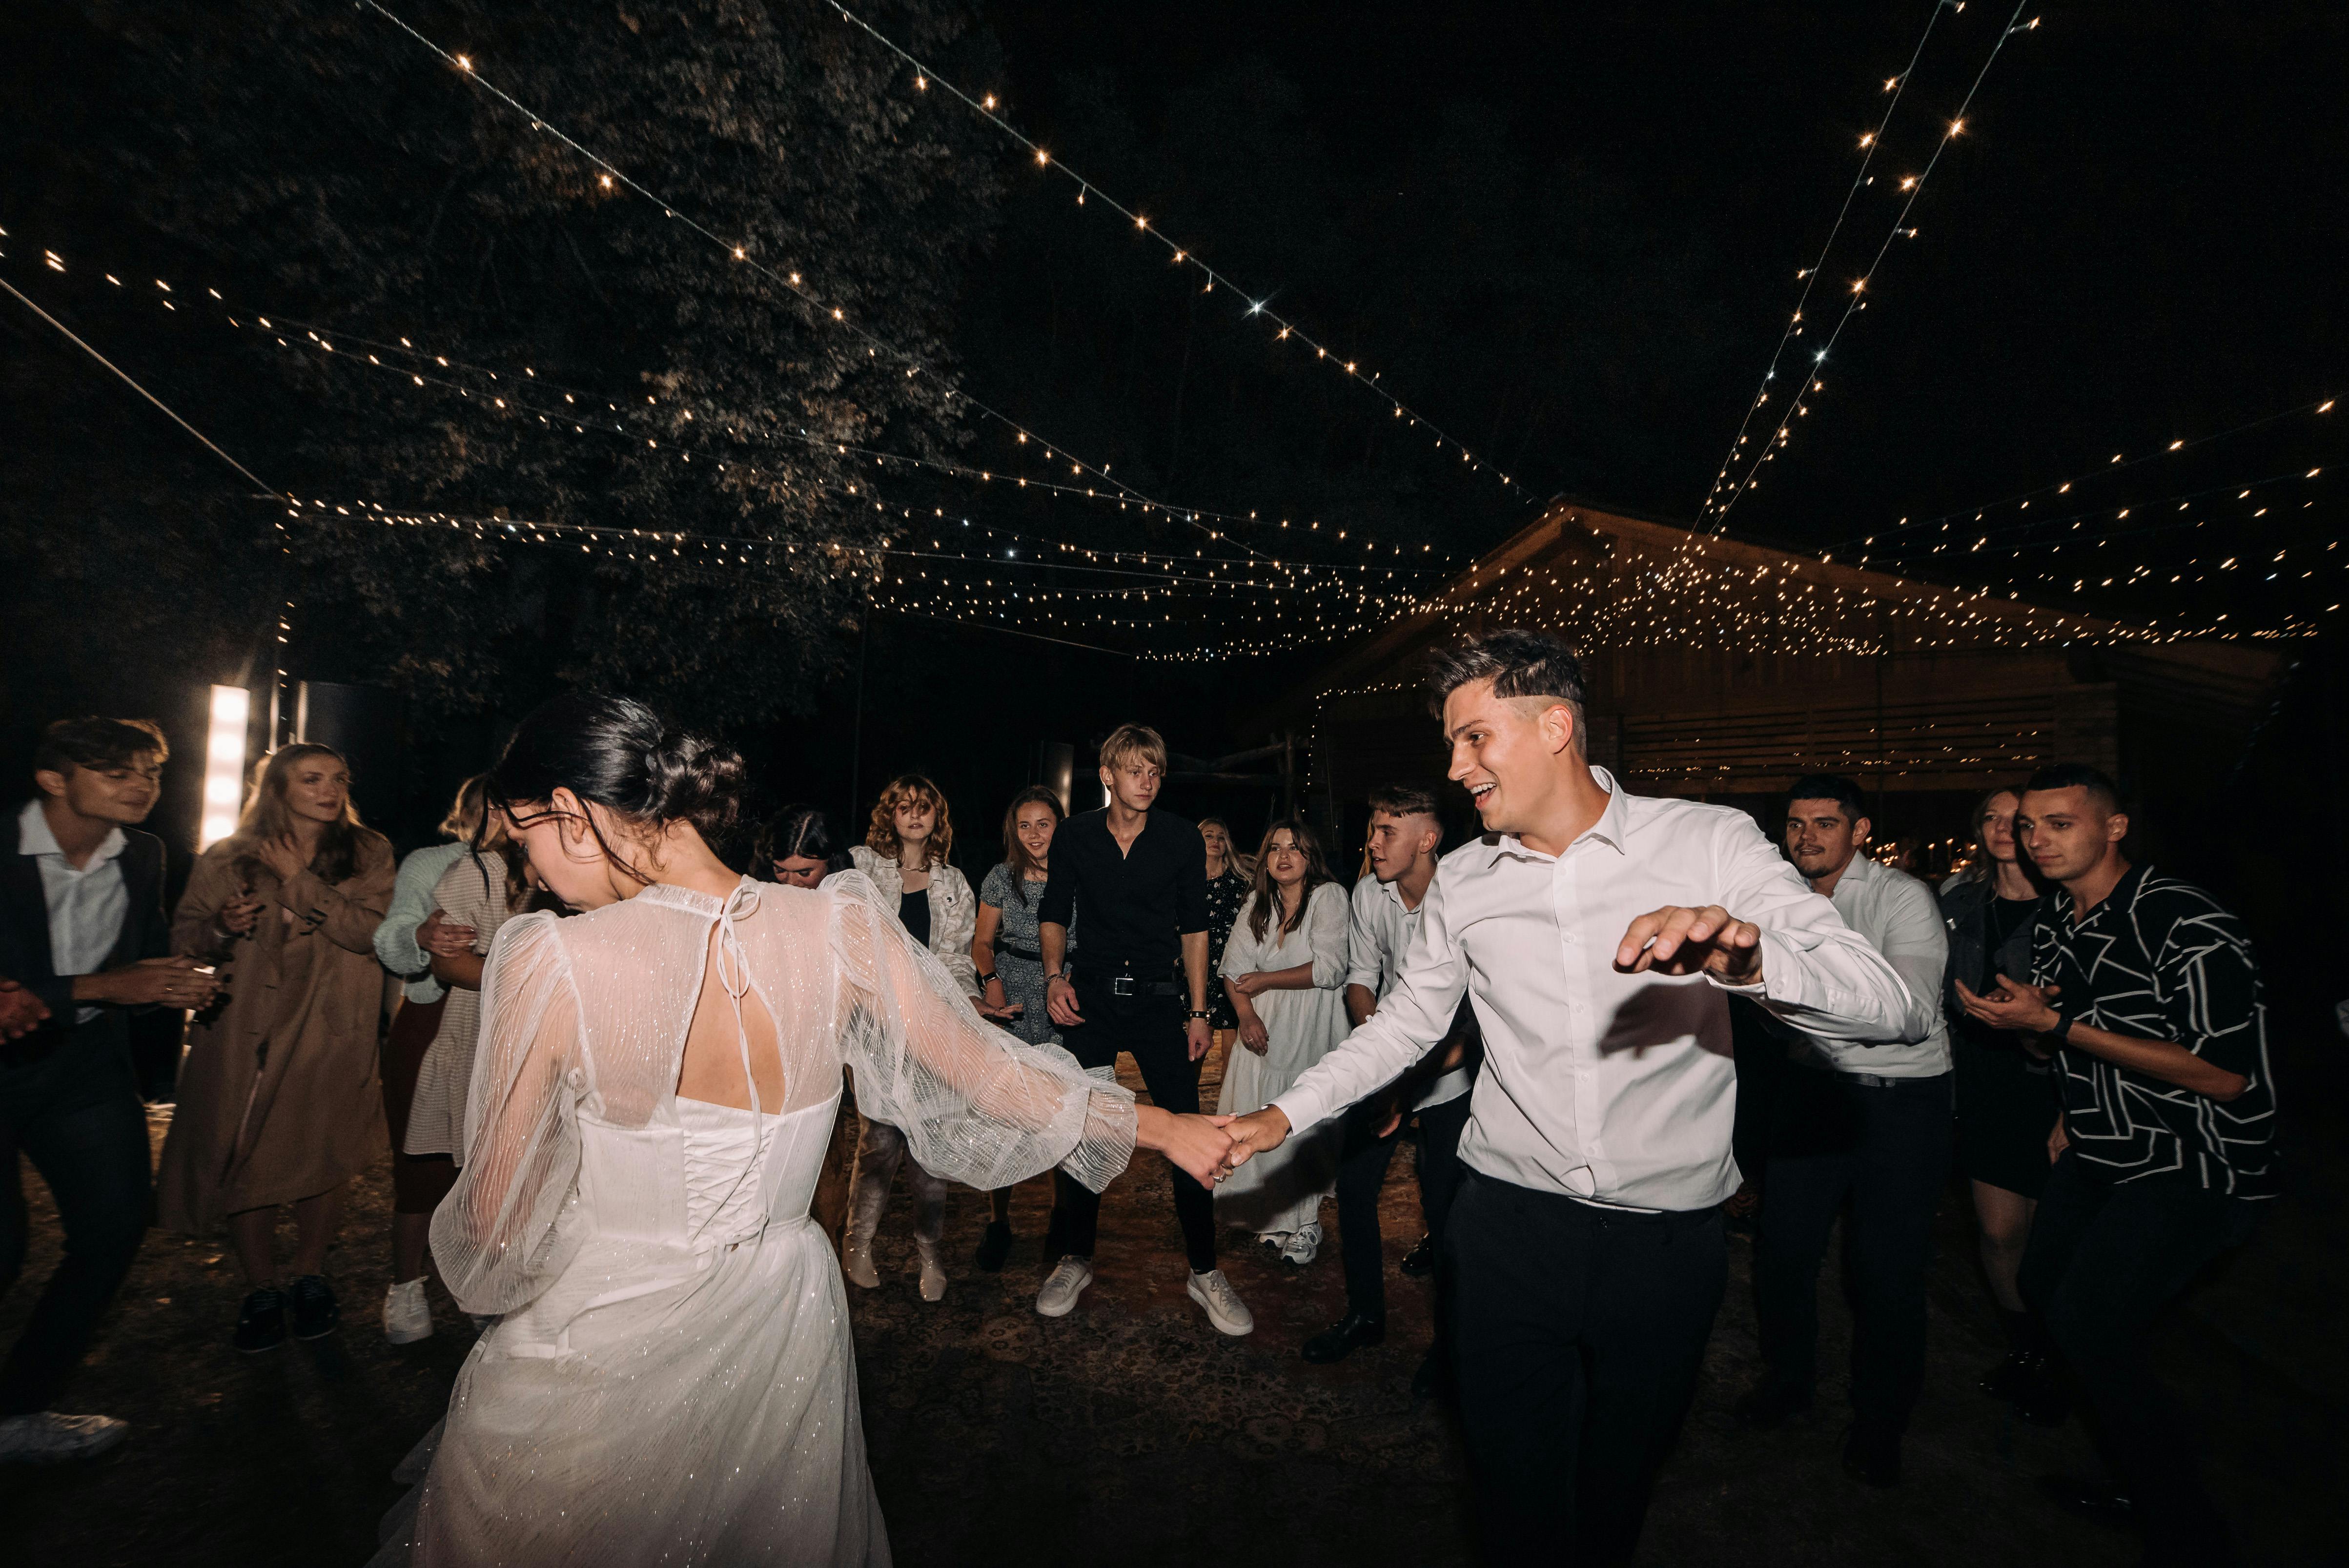 Bride, groom and guests dancing | Source: Pexels